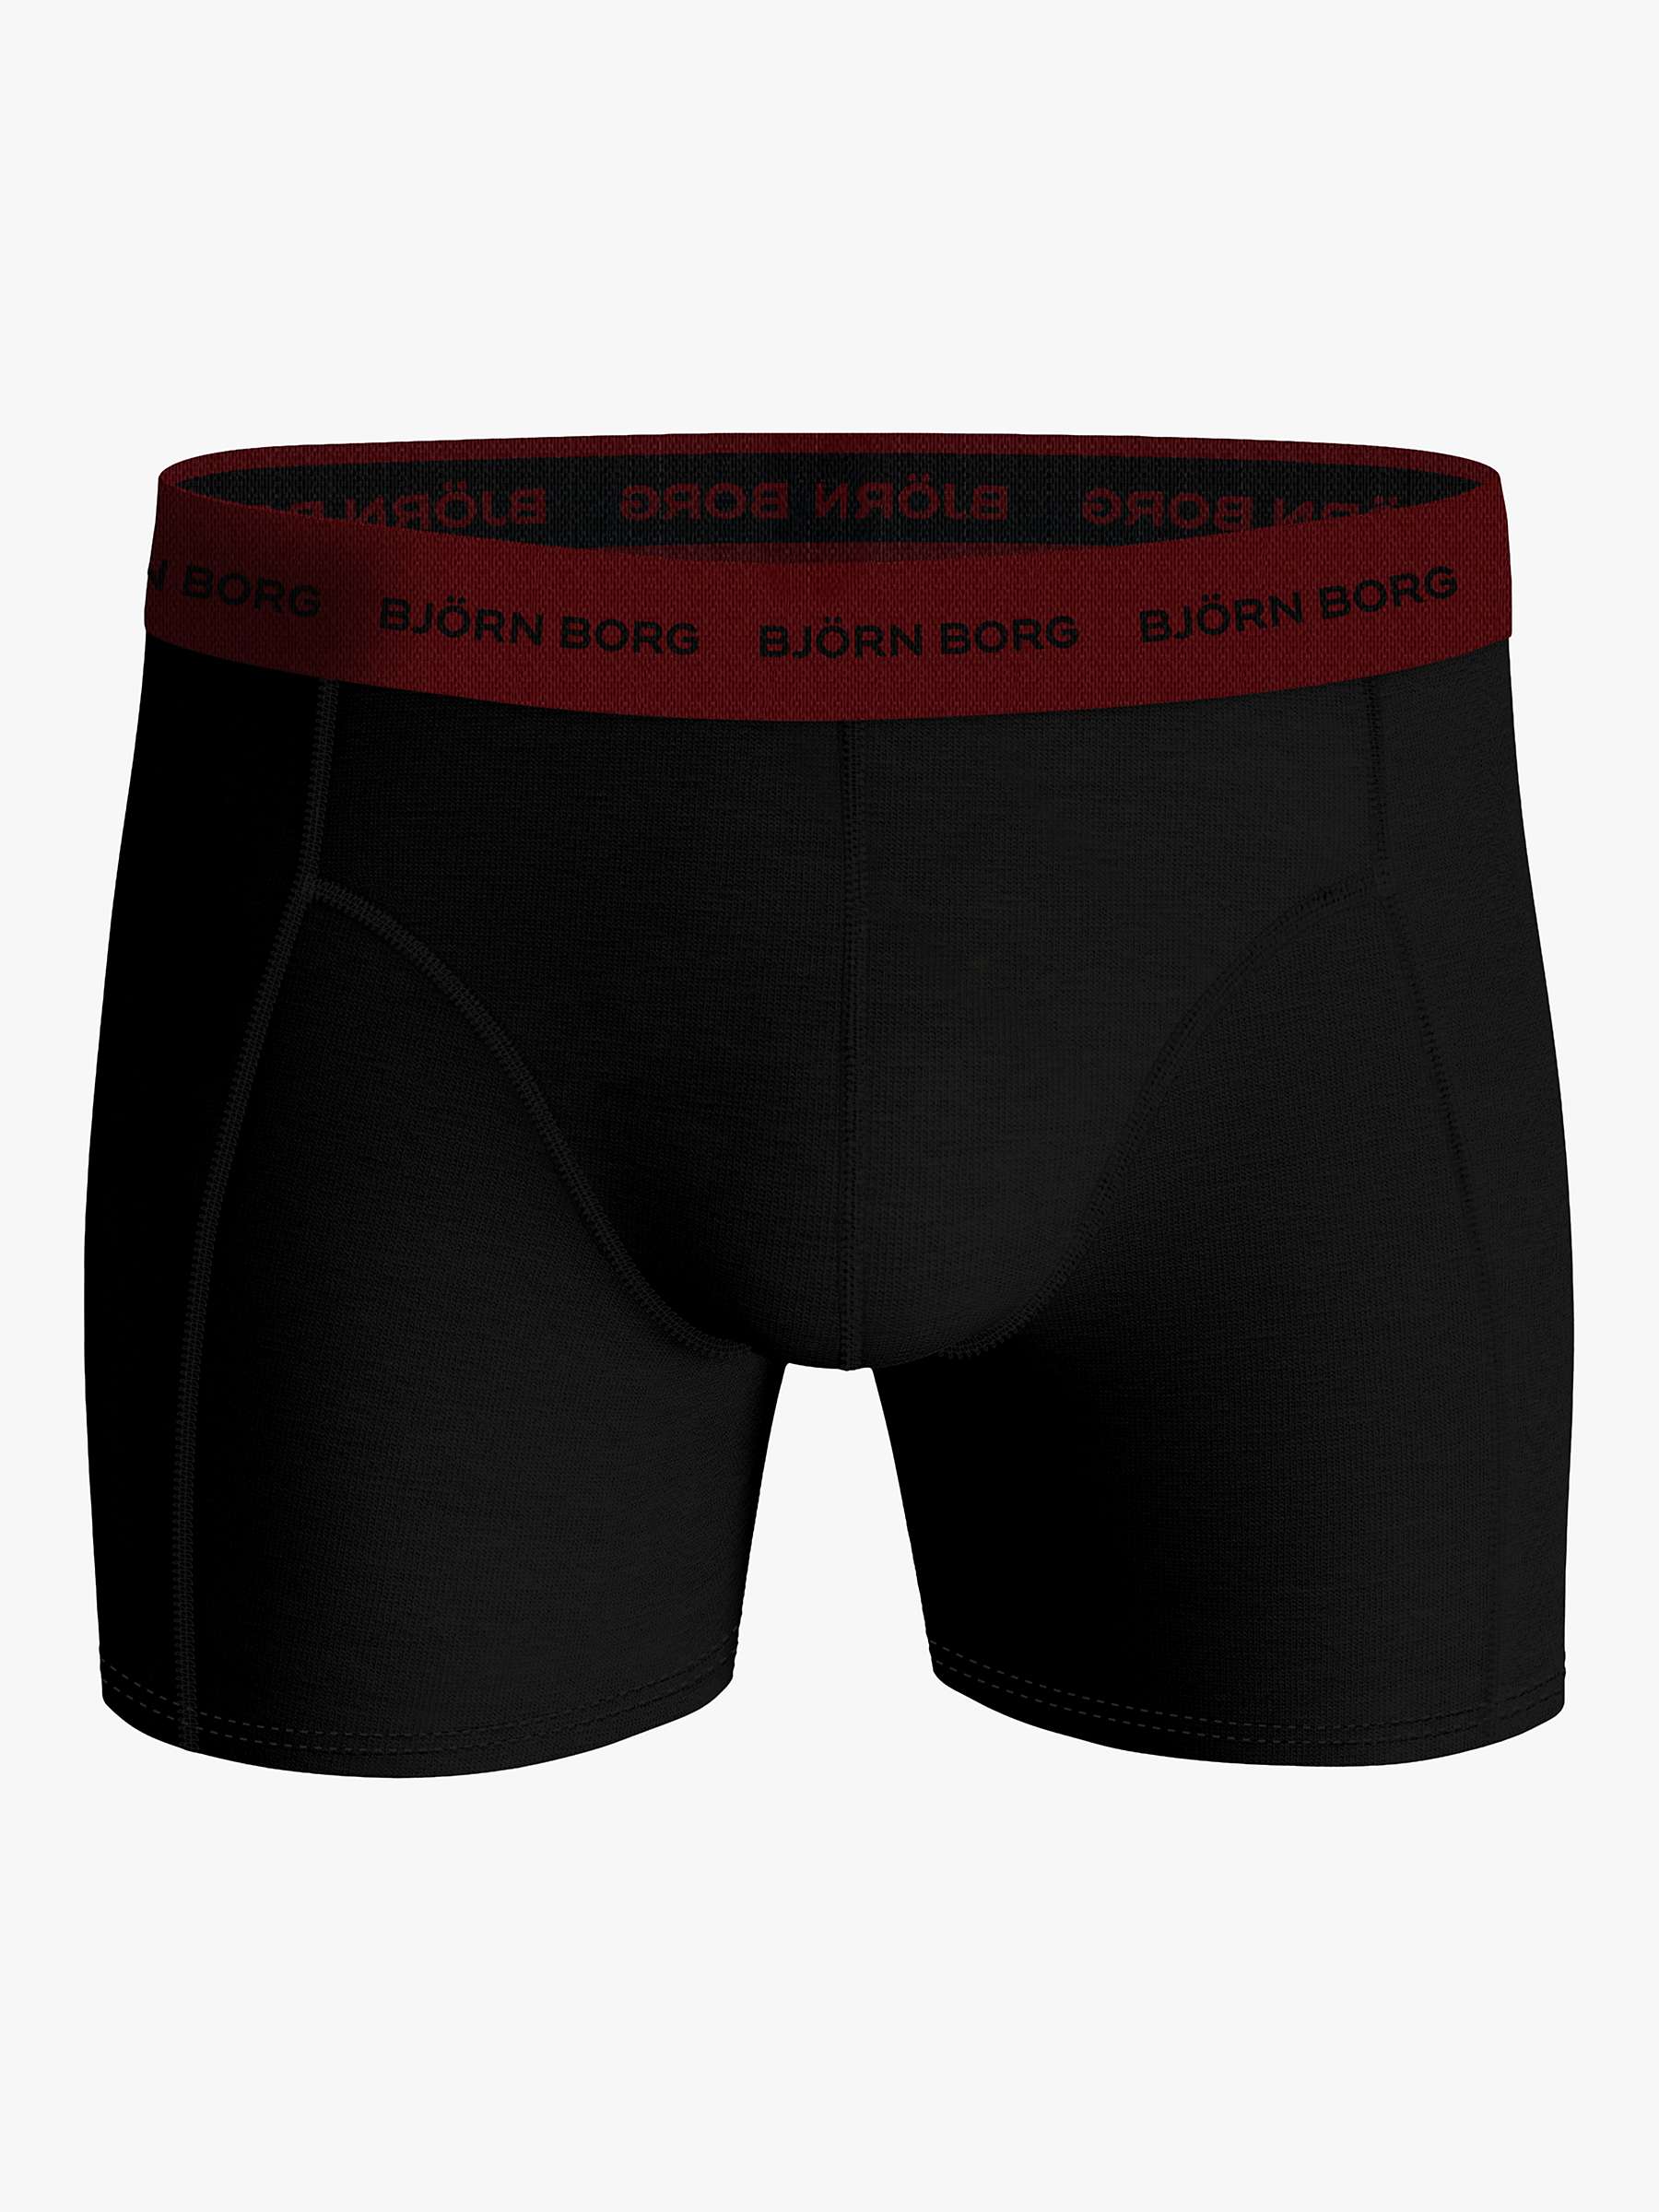 Buy Björn Borg Cotton Blend Stretch Trunks, Pack of 3, Black/Red Online at johnlewis.com